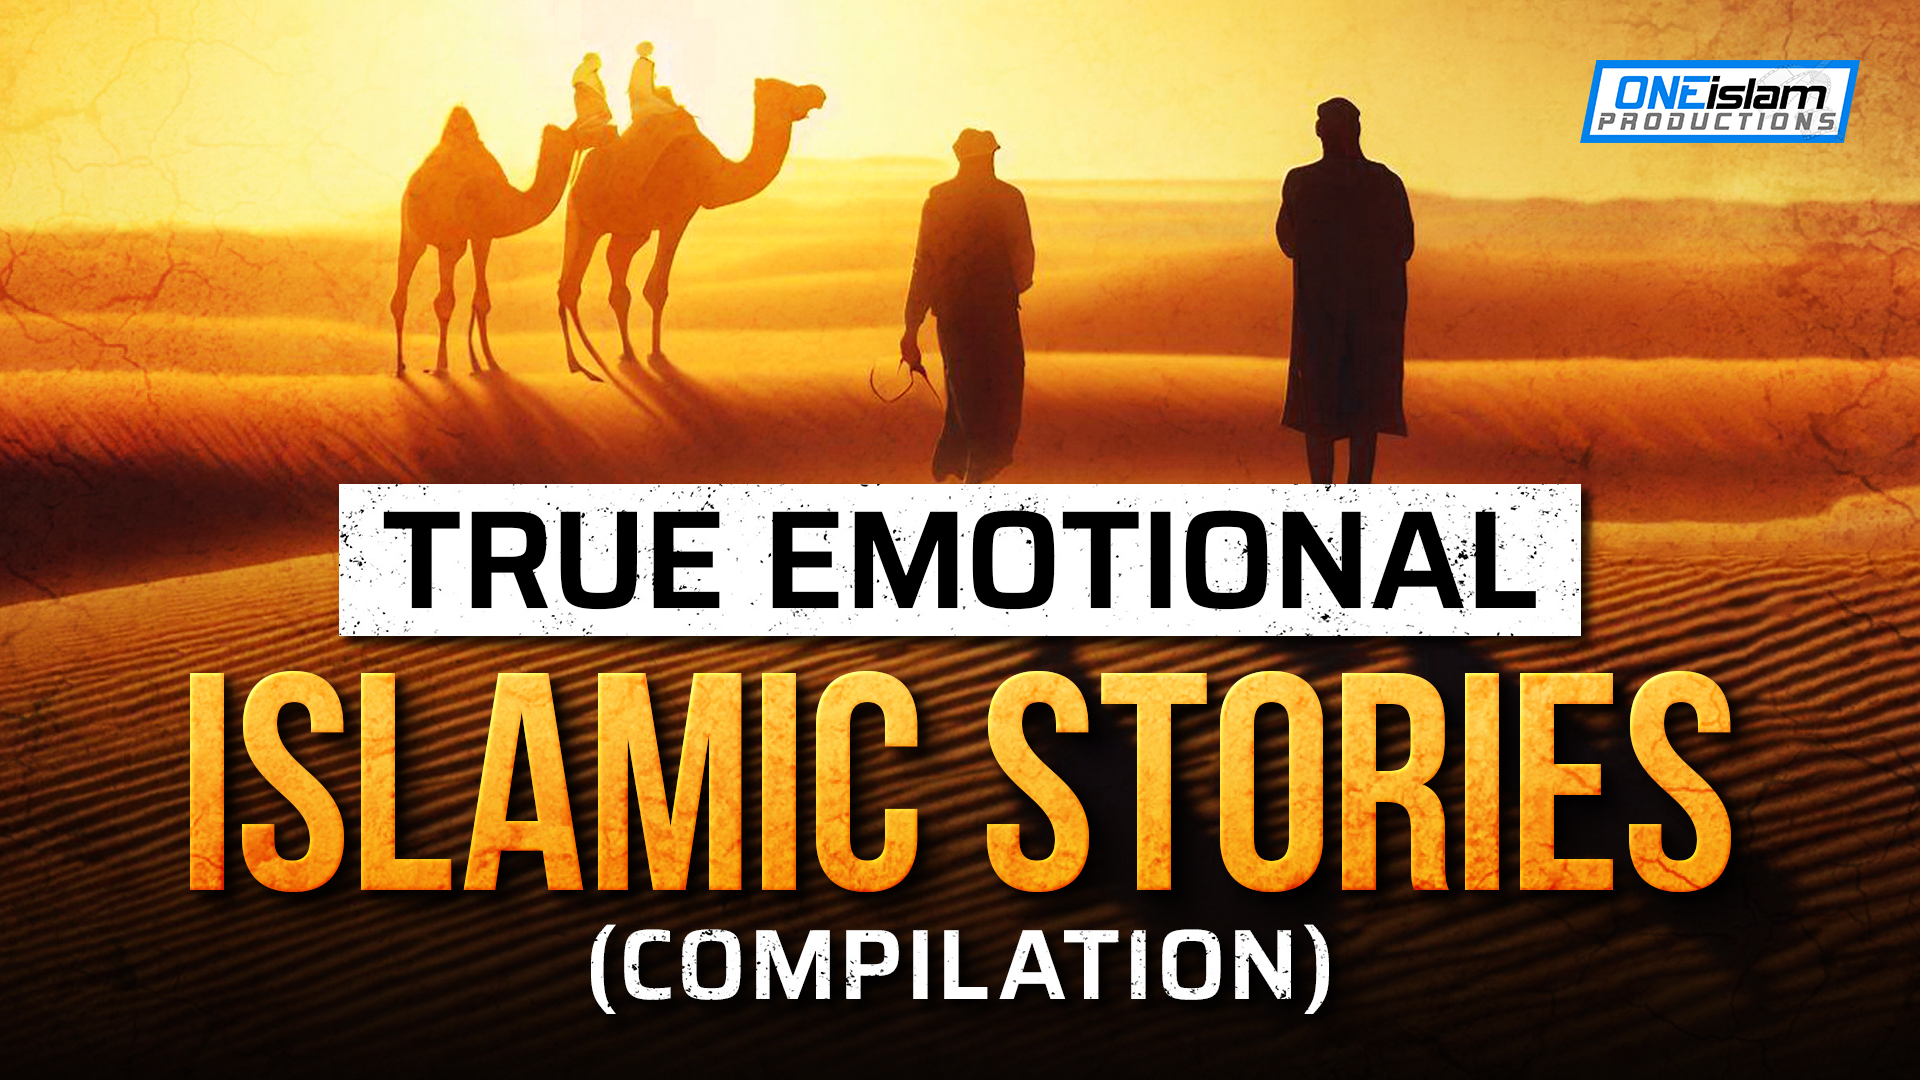 True Emotional Islamic Stories (COMPILATION)